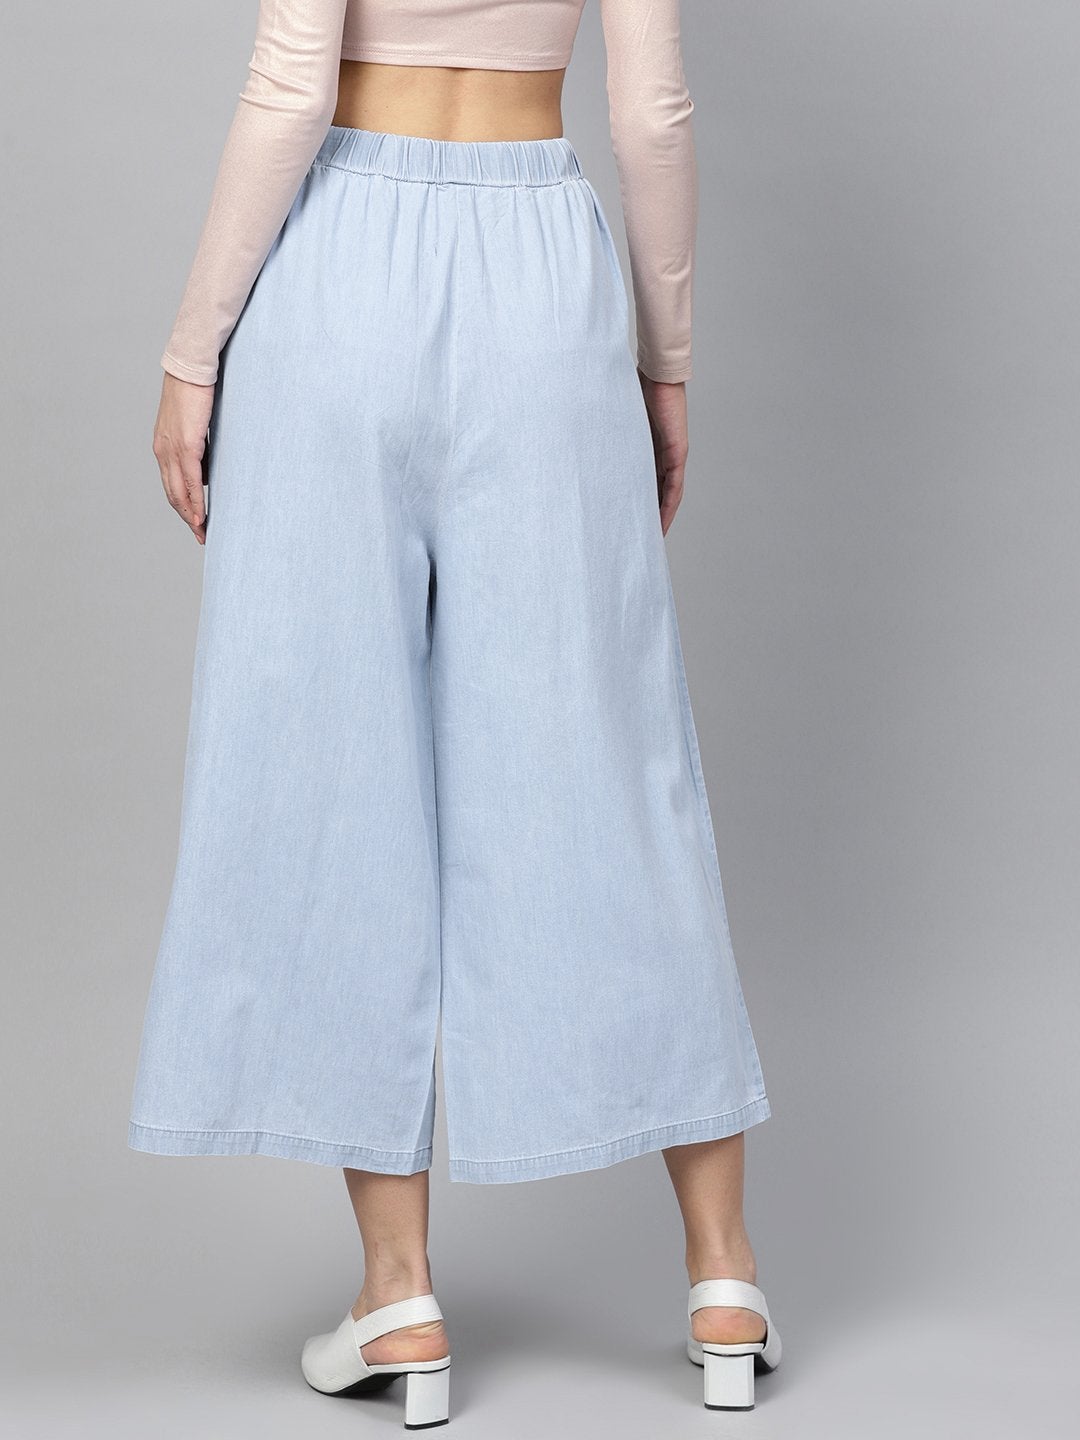 Women's Blue Denim Neon Drawstring Pants - SASSAFRAS